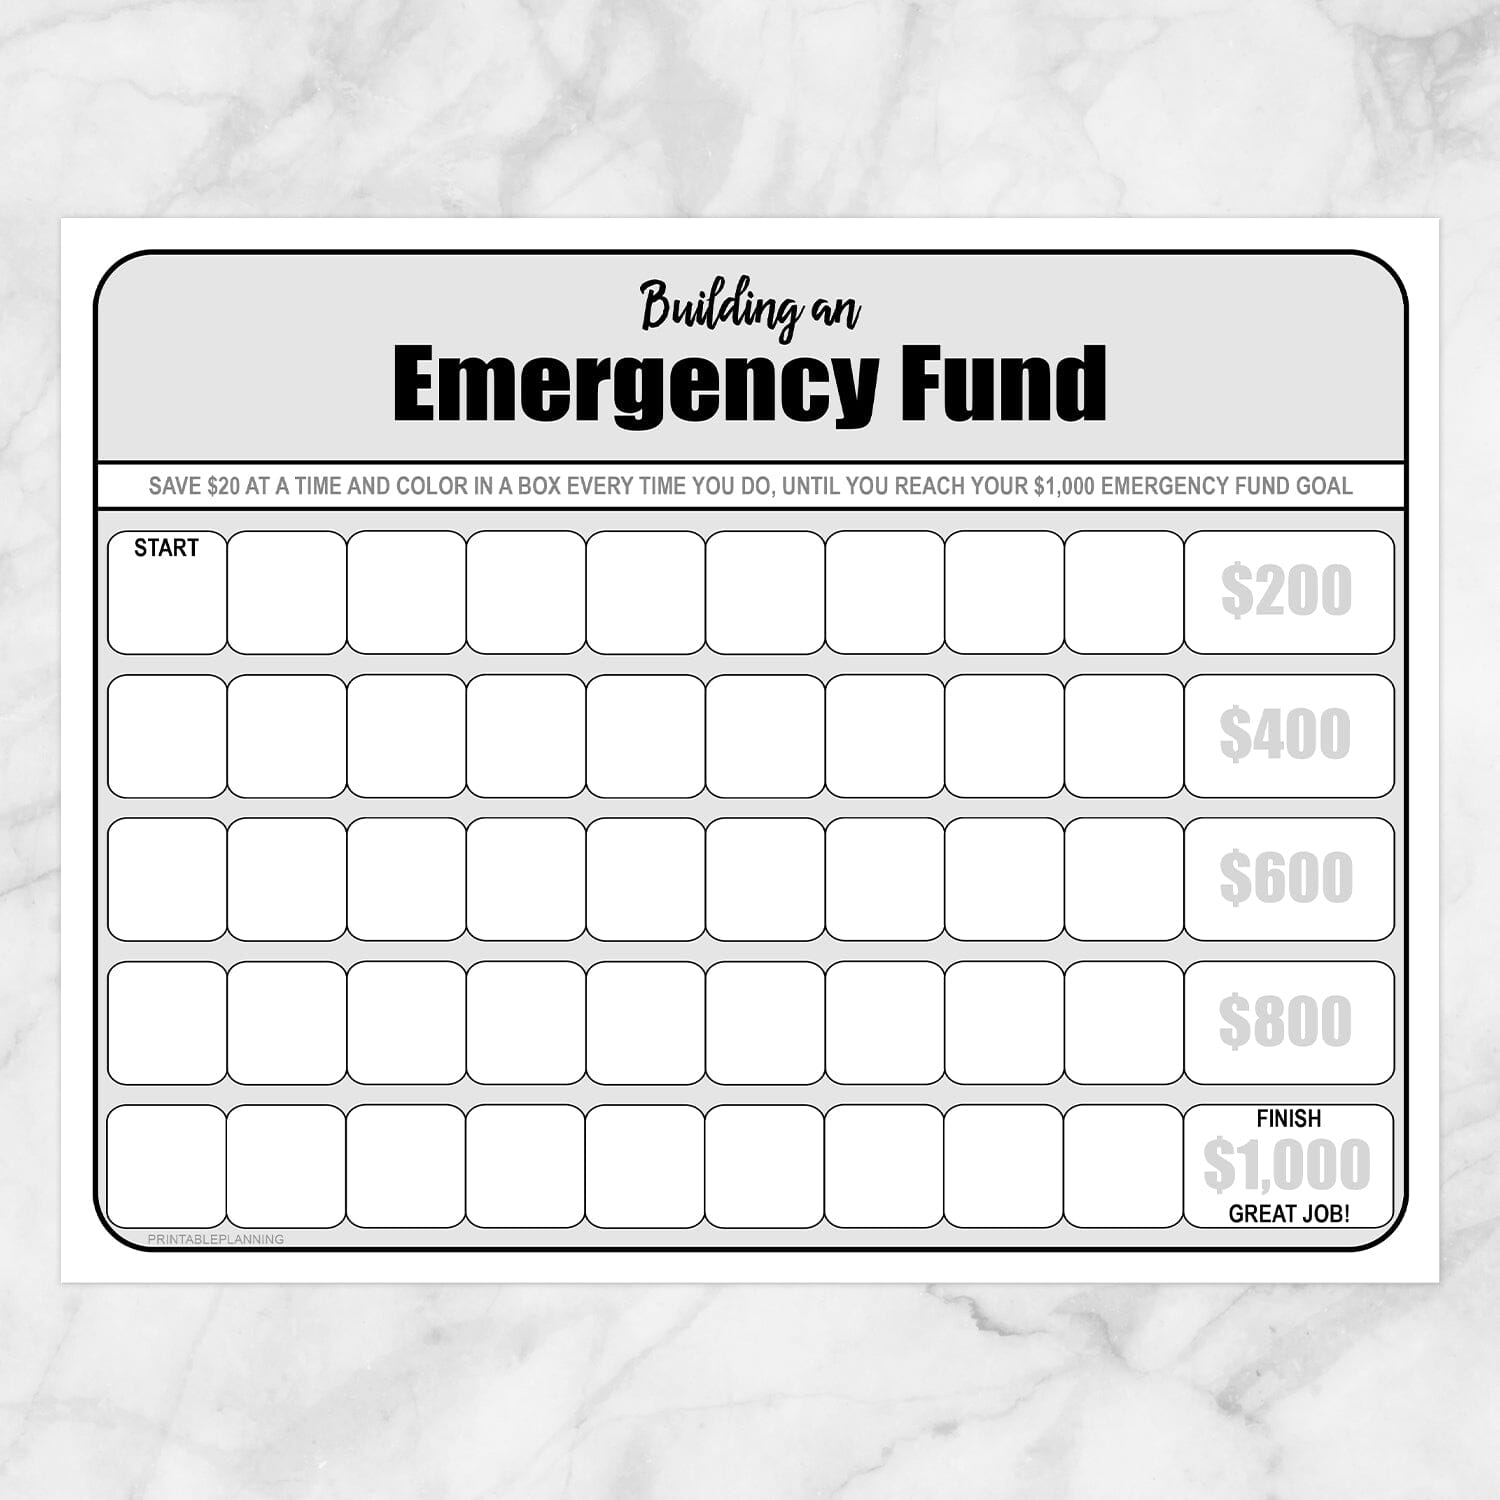 Printable Building an Emergency Fund Worksheet (by $20 increments) at Printable Planning.